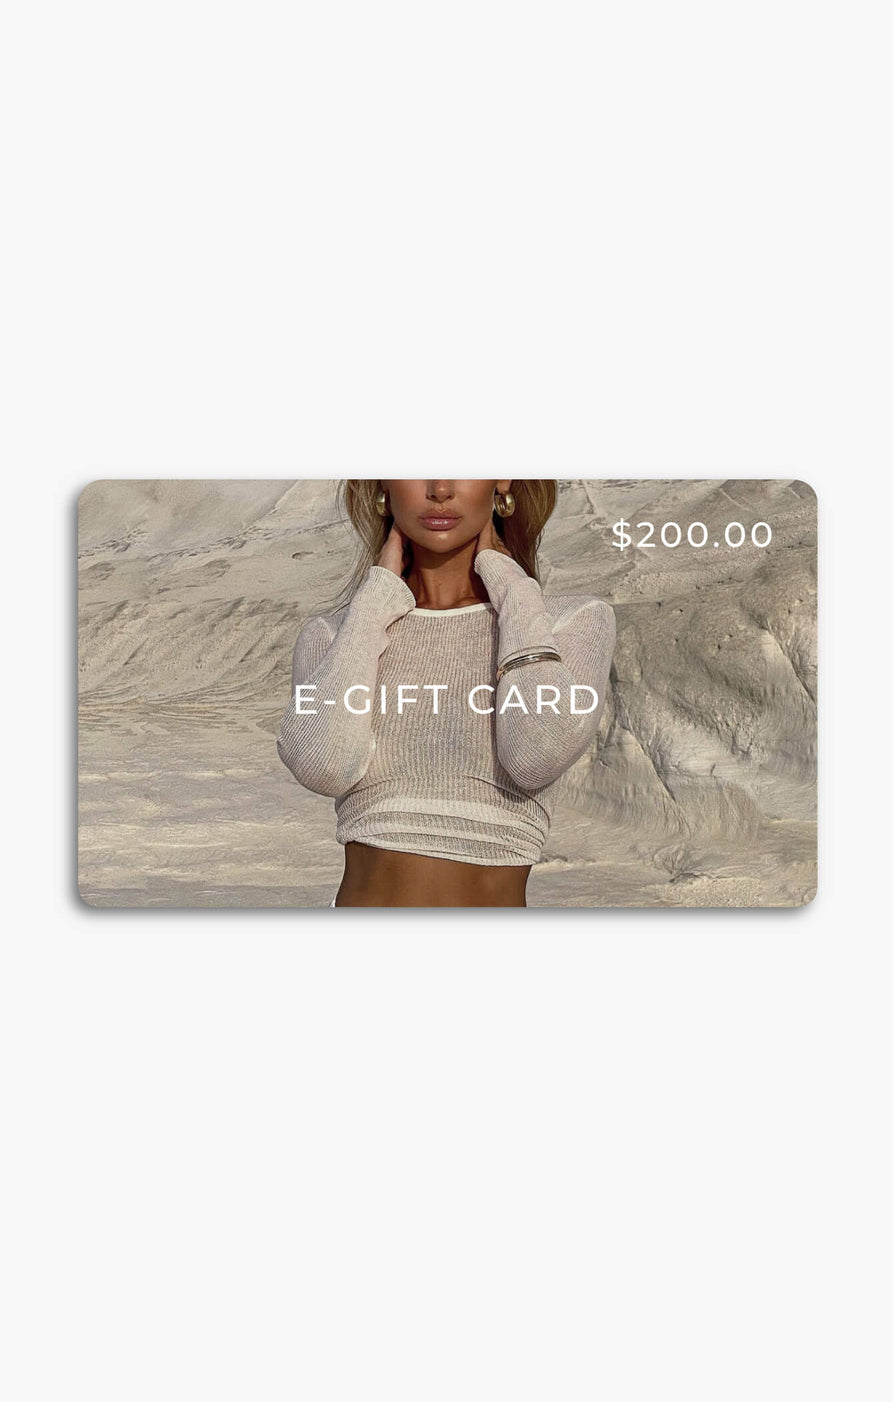 $200 GIFT CARD